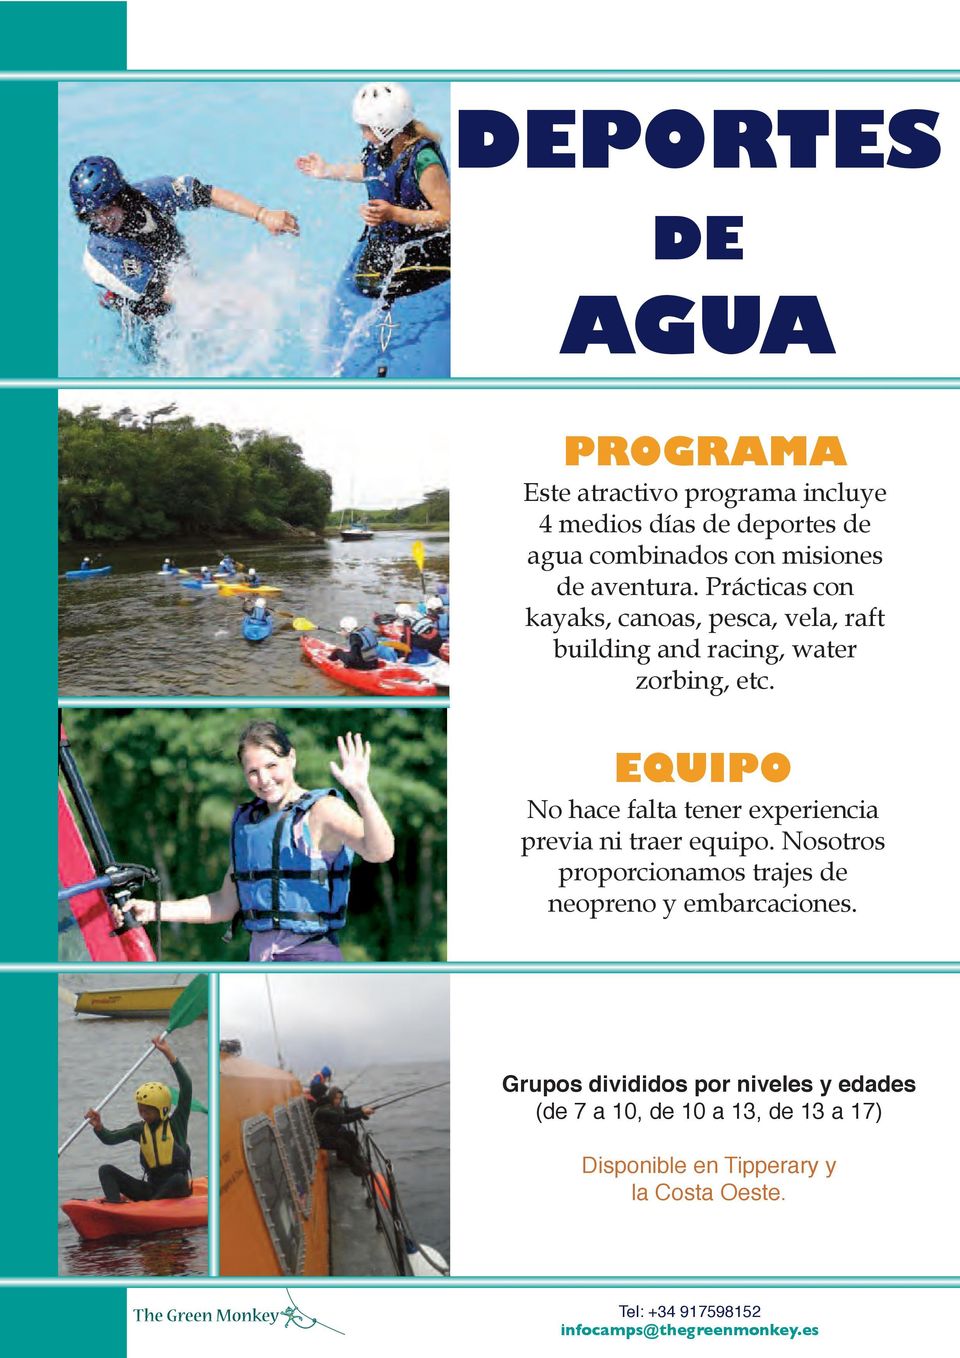 Prácticas con kayaks, canoas, pesca, vela, raft building and racing, water zorbing, etc.